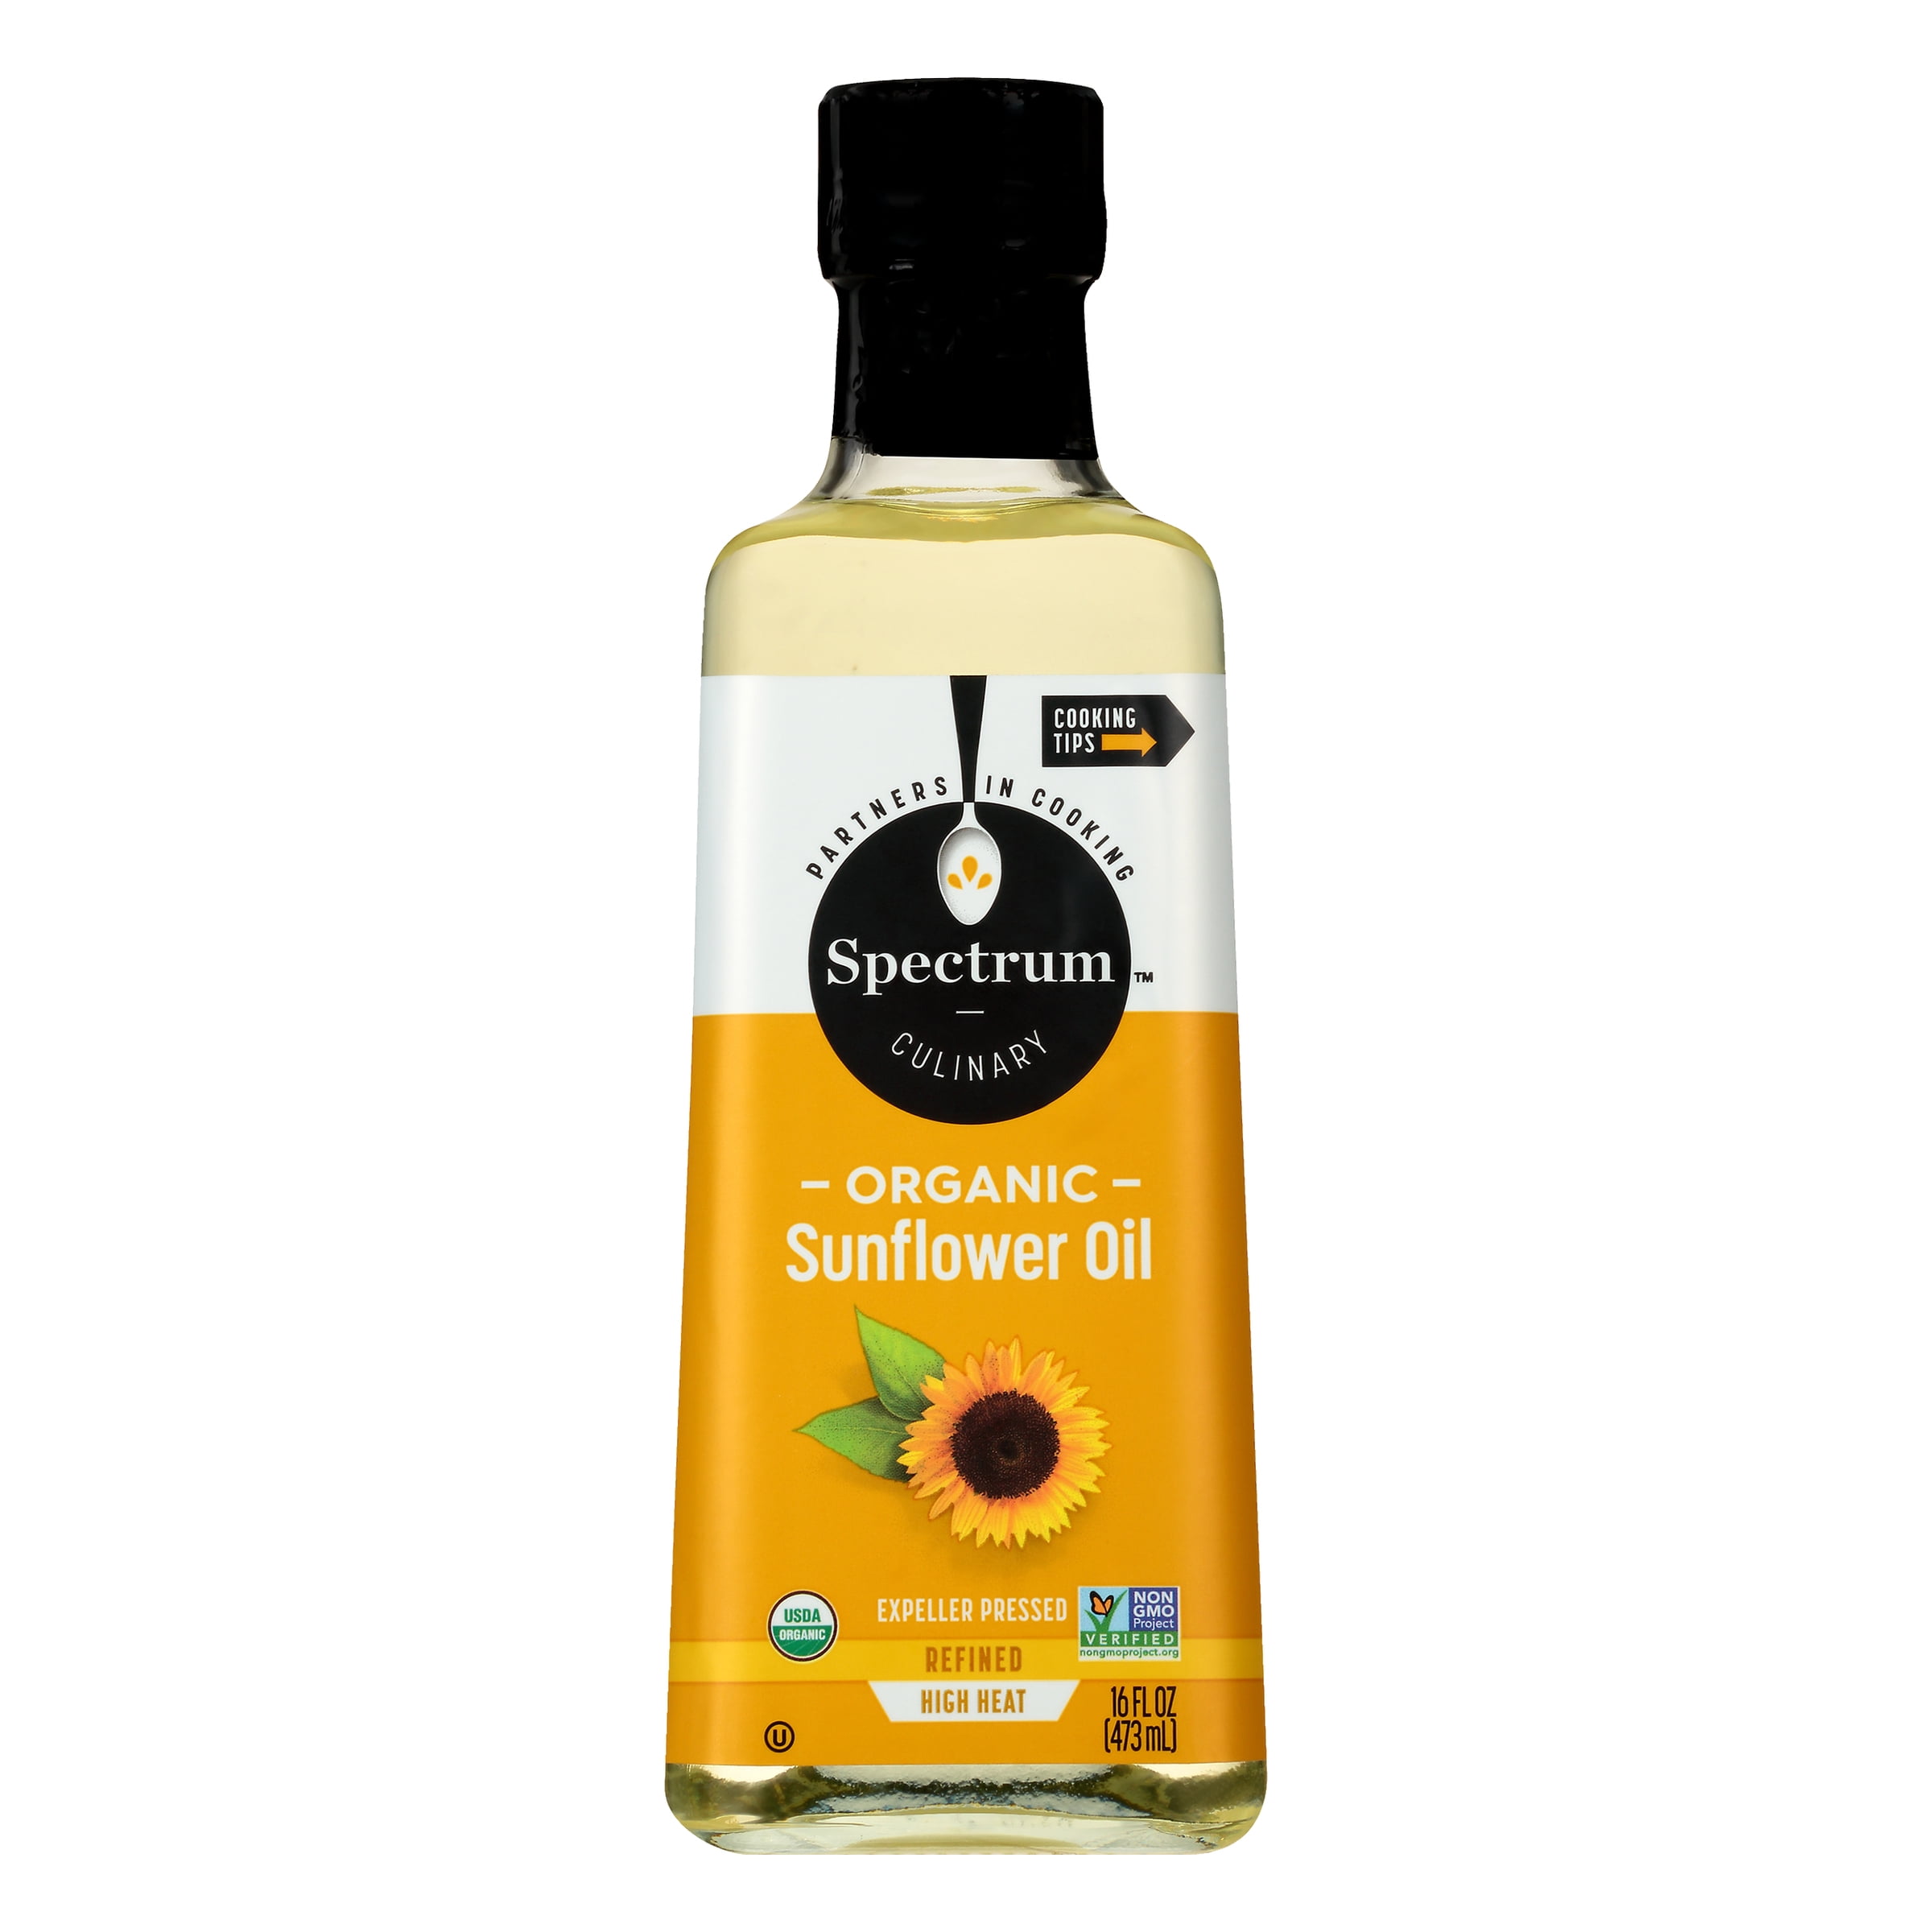 Olive Oil Virgin 32 oz organic carrier premium cold press non-gmo bulk  natural